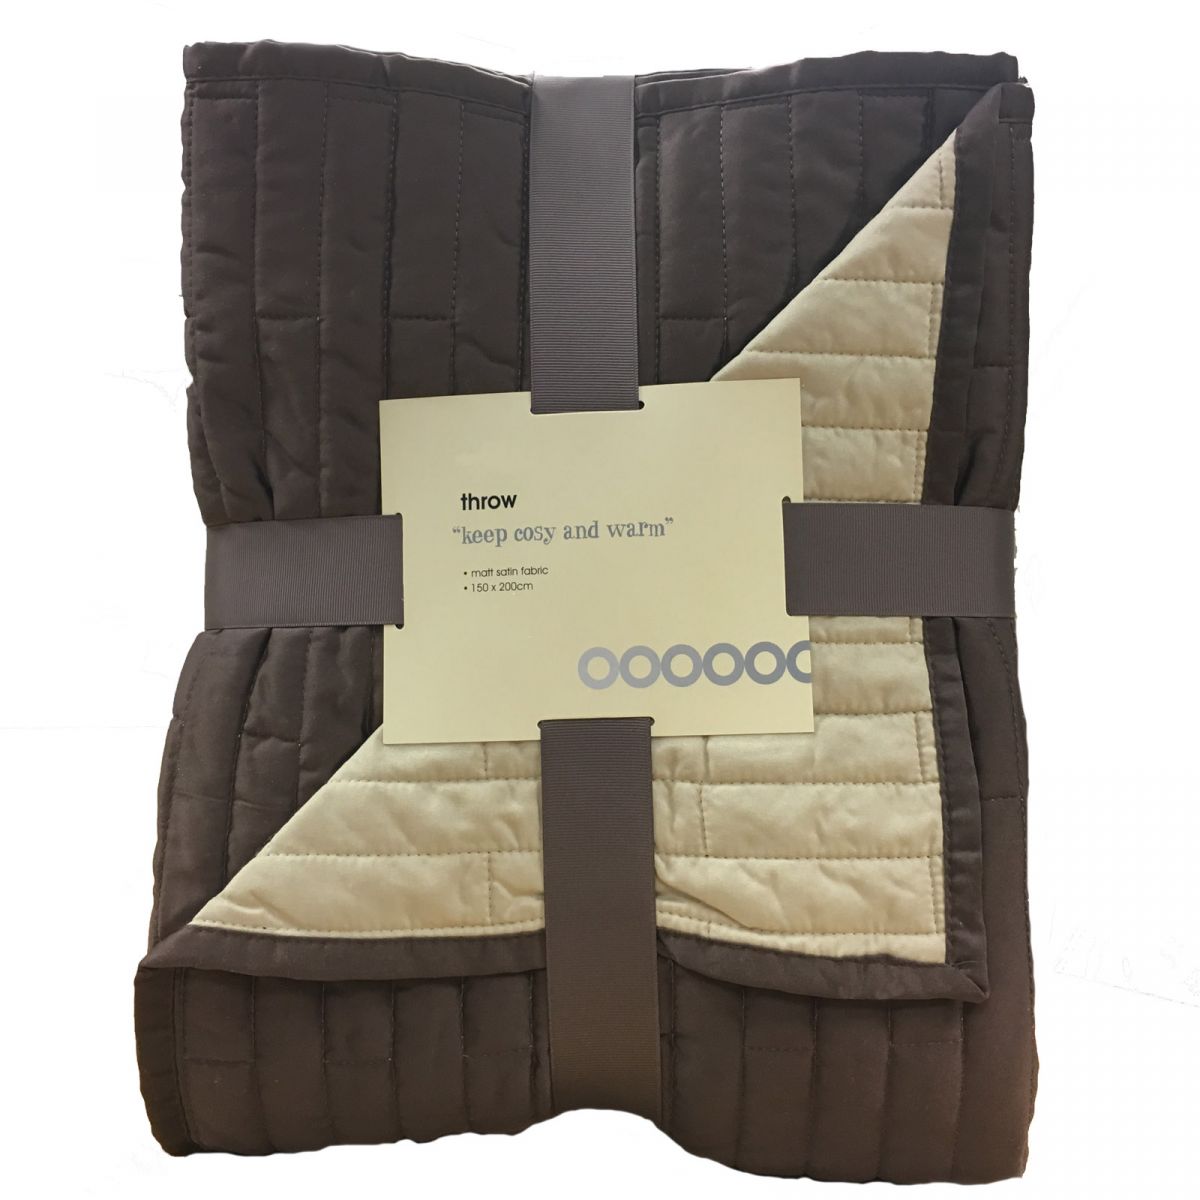 Luxury Super Soft Matt/Satin Fleece Throw Blanket 150x200cm - Chocolate/Caramel